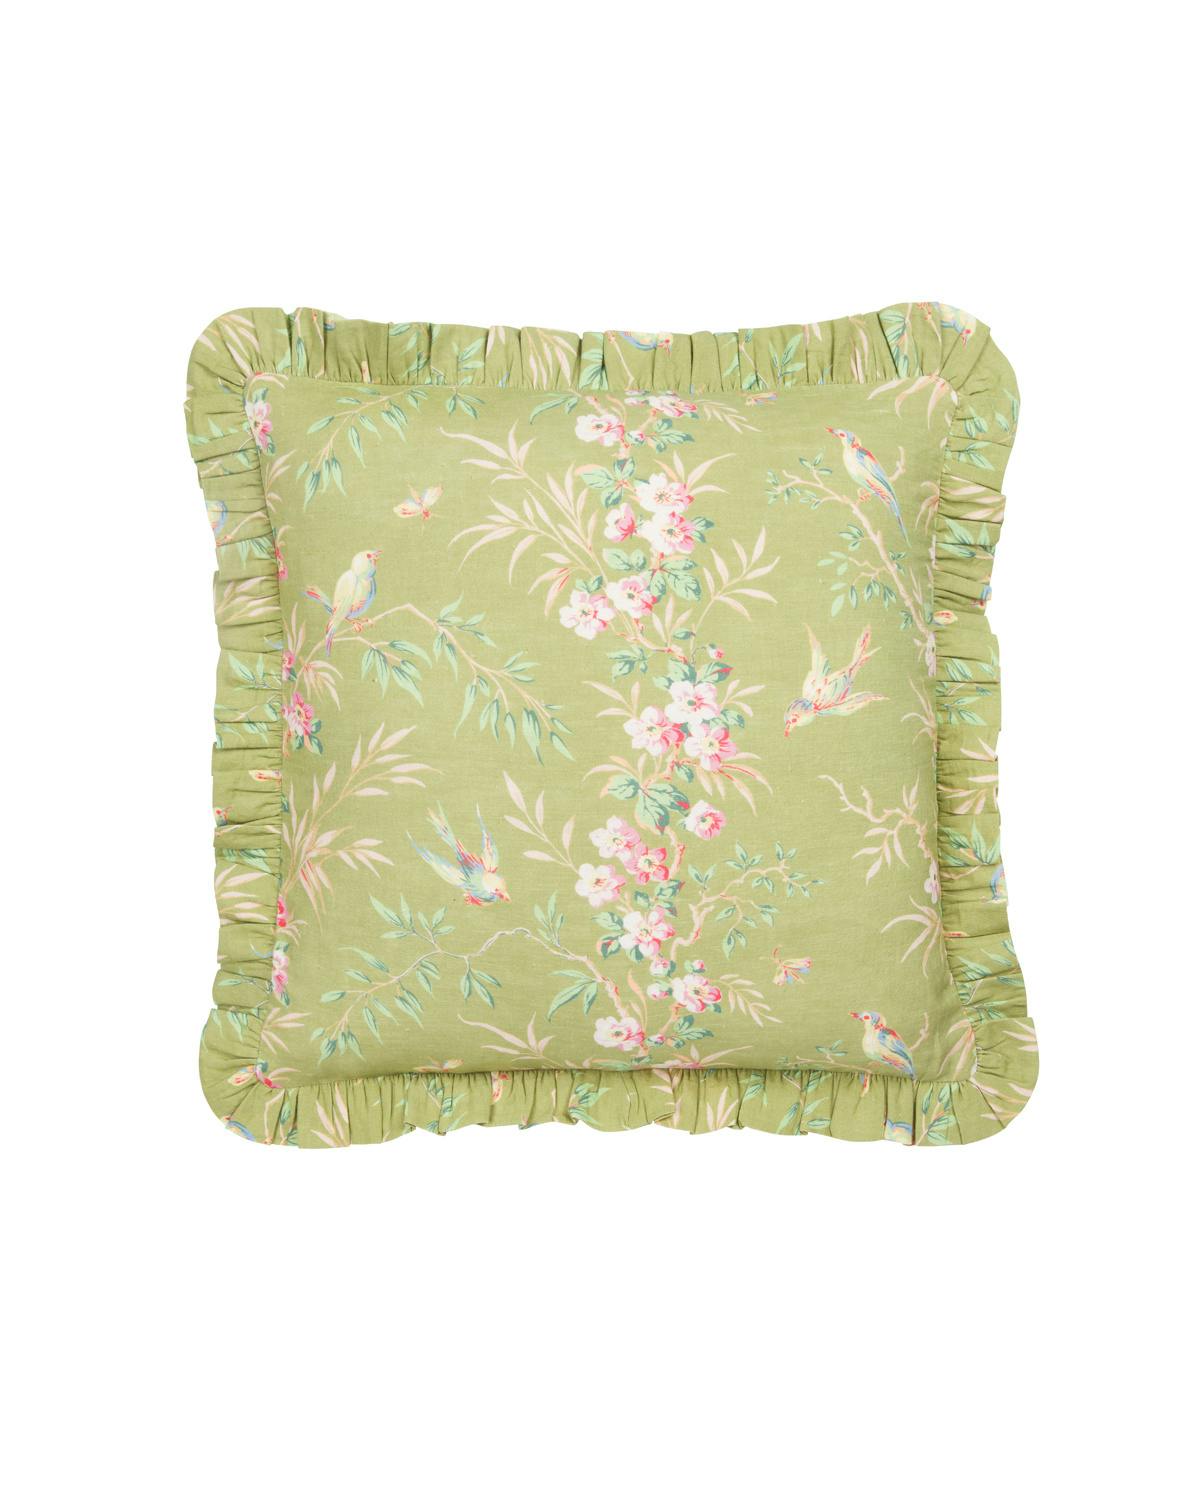 Spring Cushion Cover 50x50cm, Flower Vine Green. Image #1